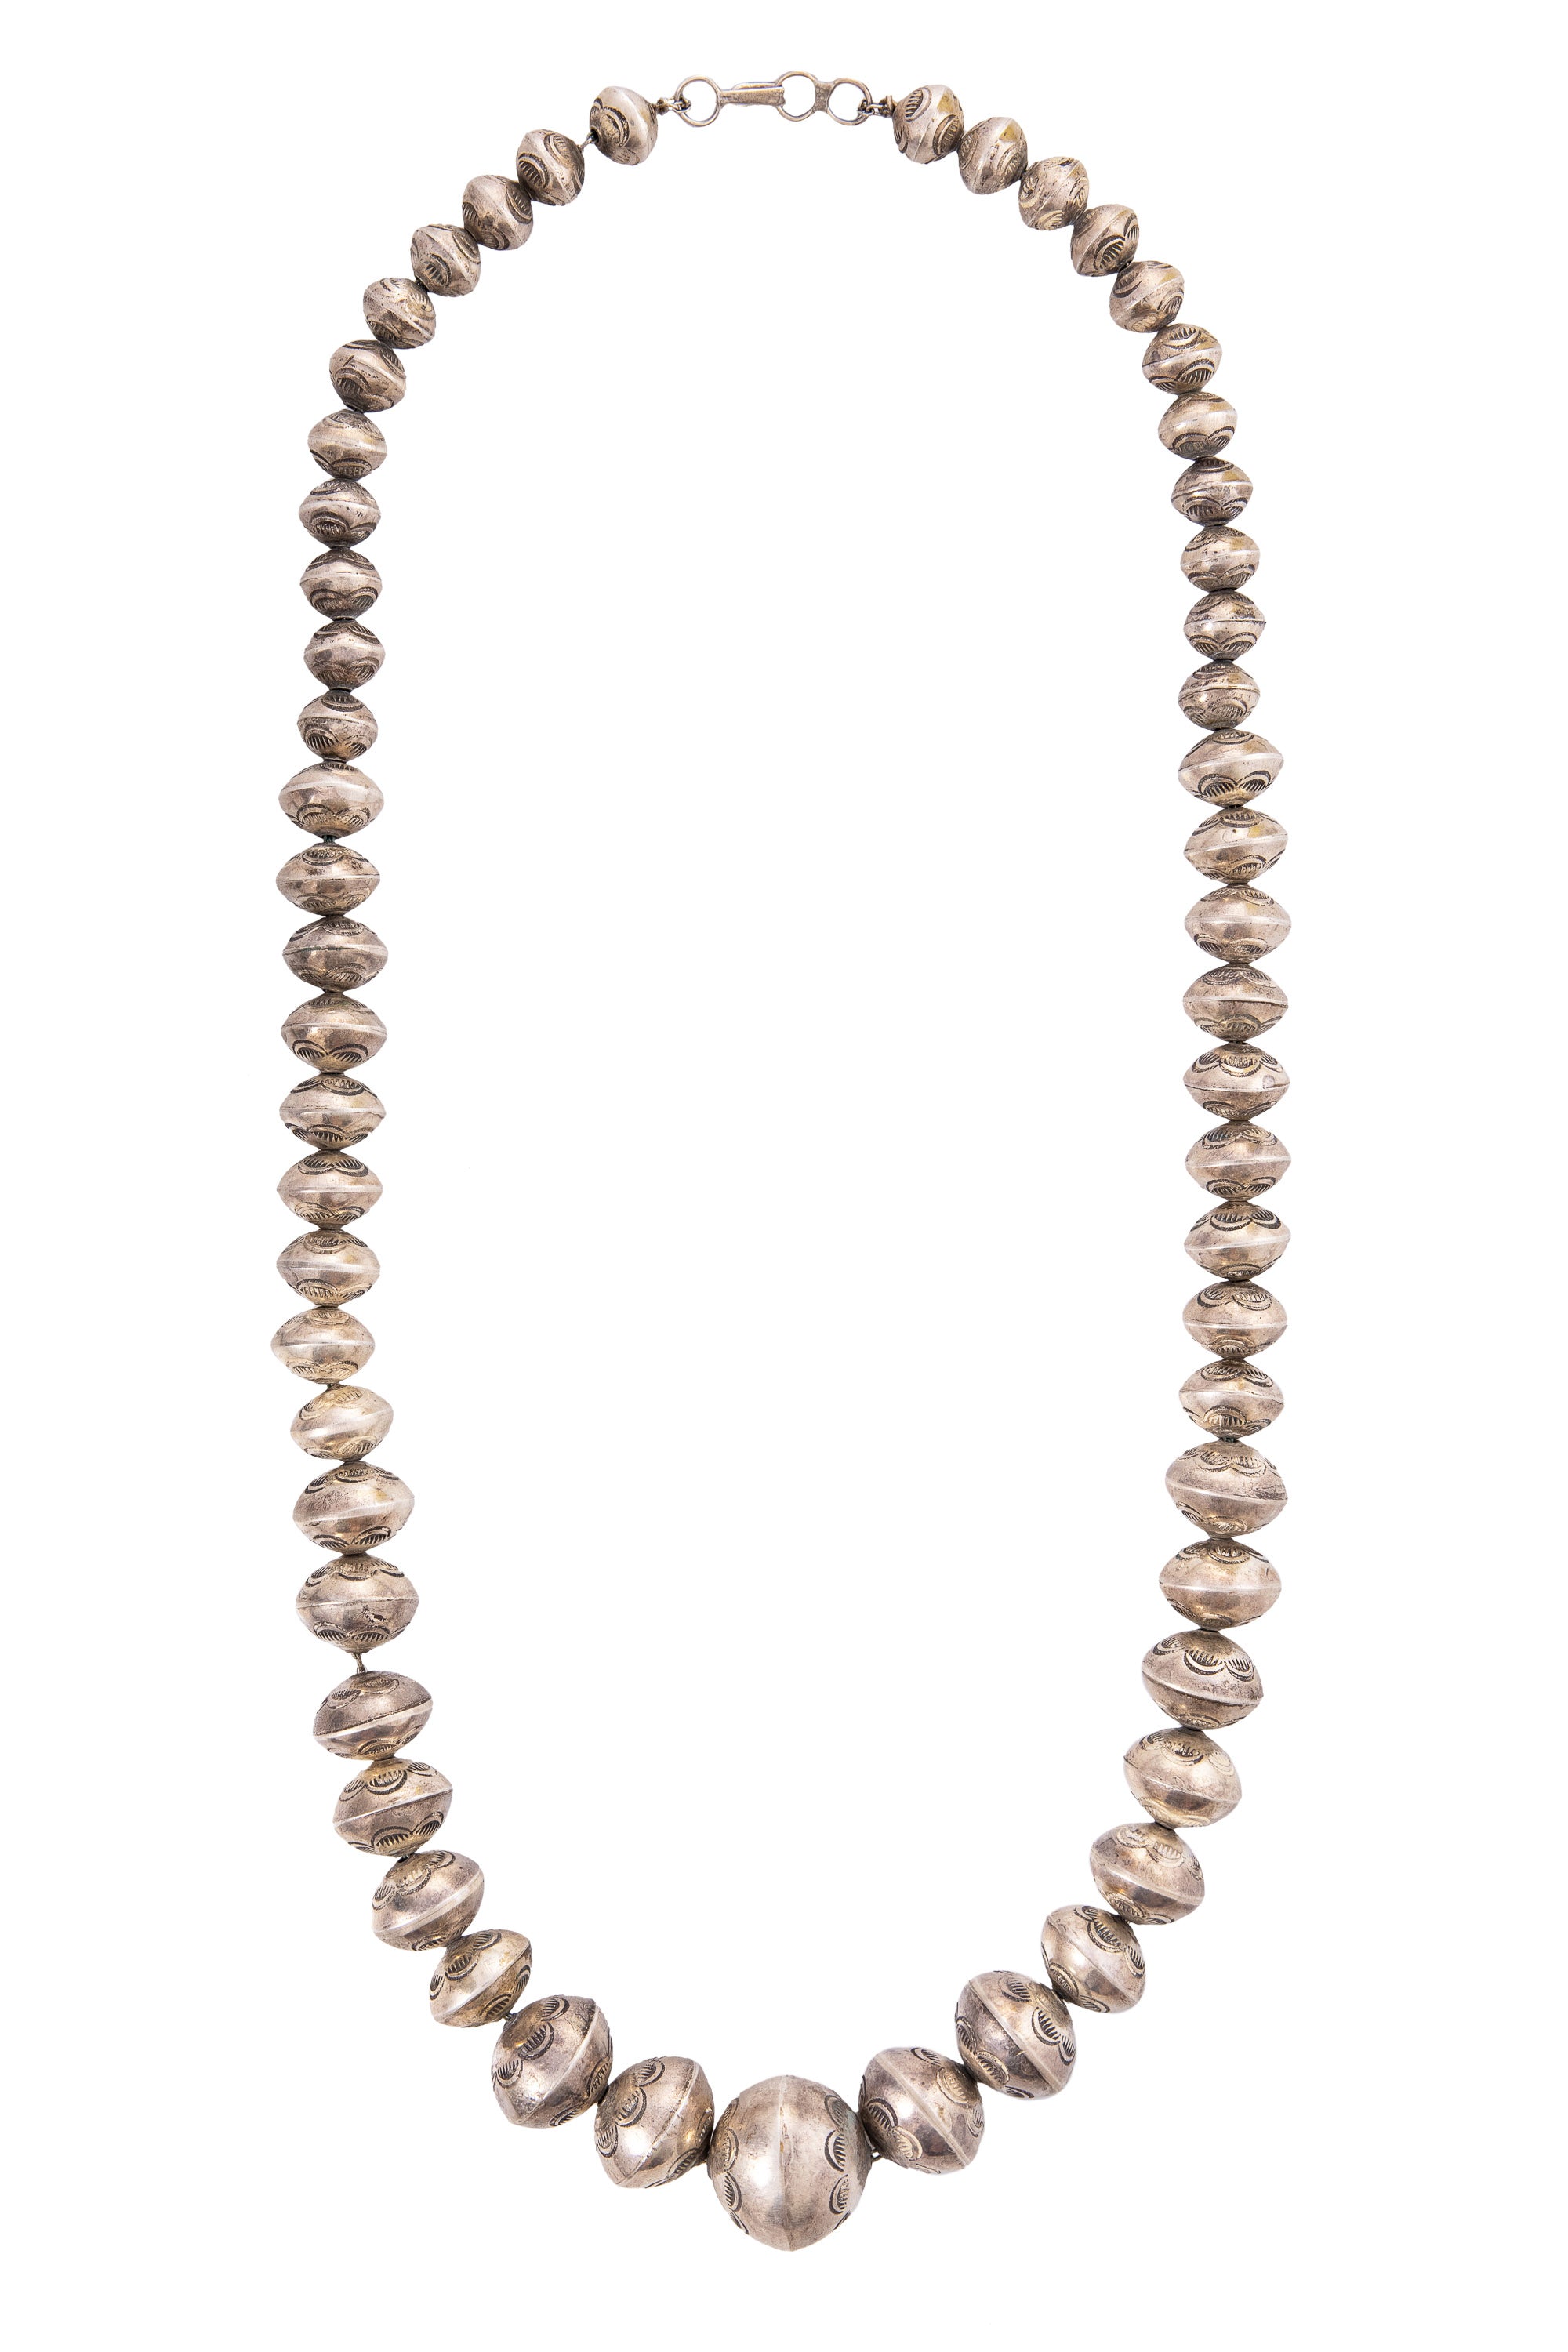 Necklace, Bead, Desert Pearls, Hand Stamped, Vintage, Estate, 1135